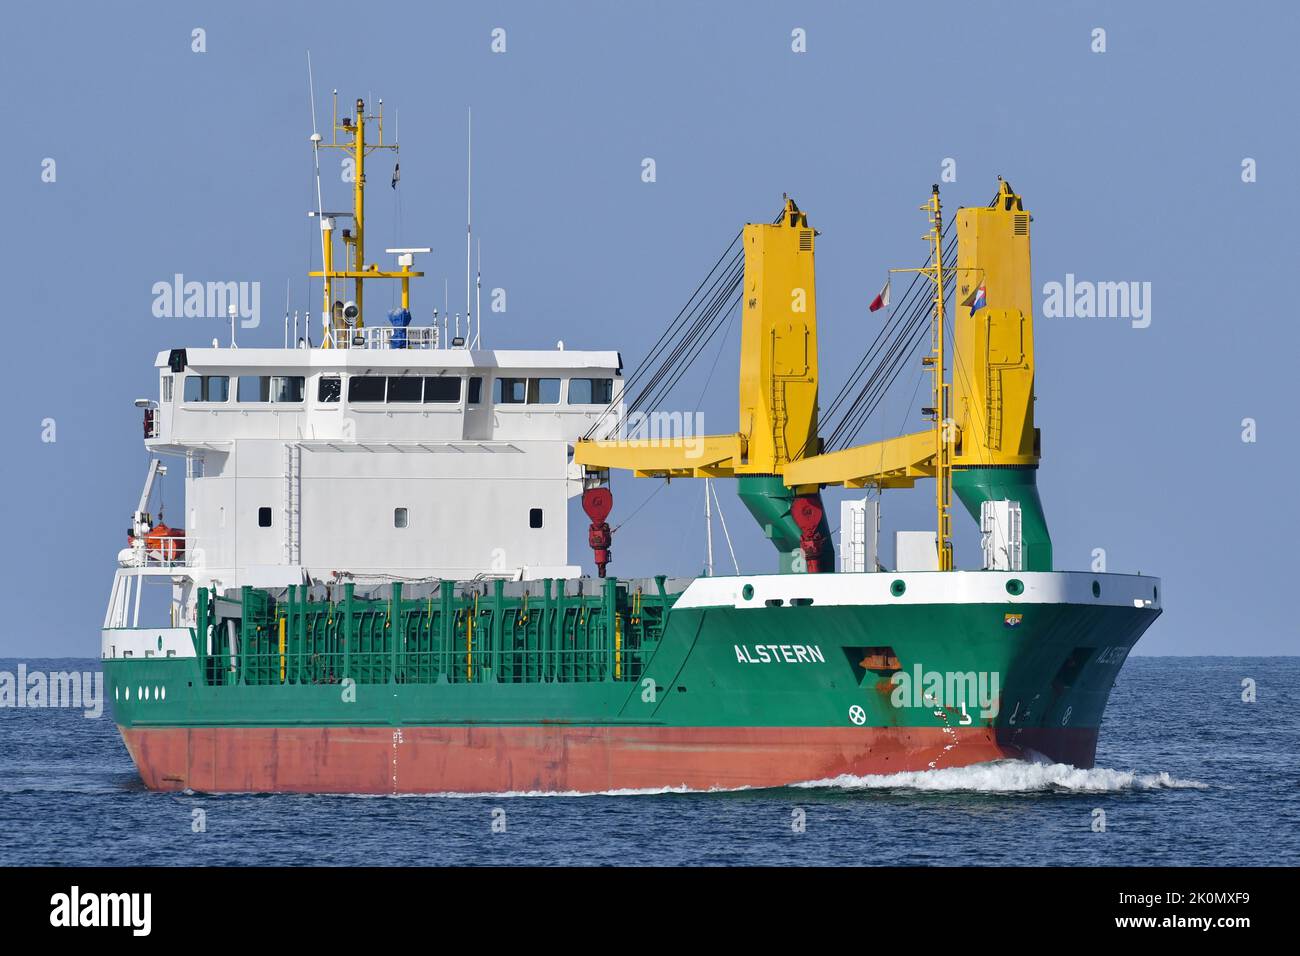 General Cargo Ship ALSTERN Stock Photo